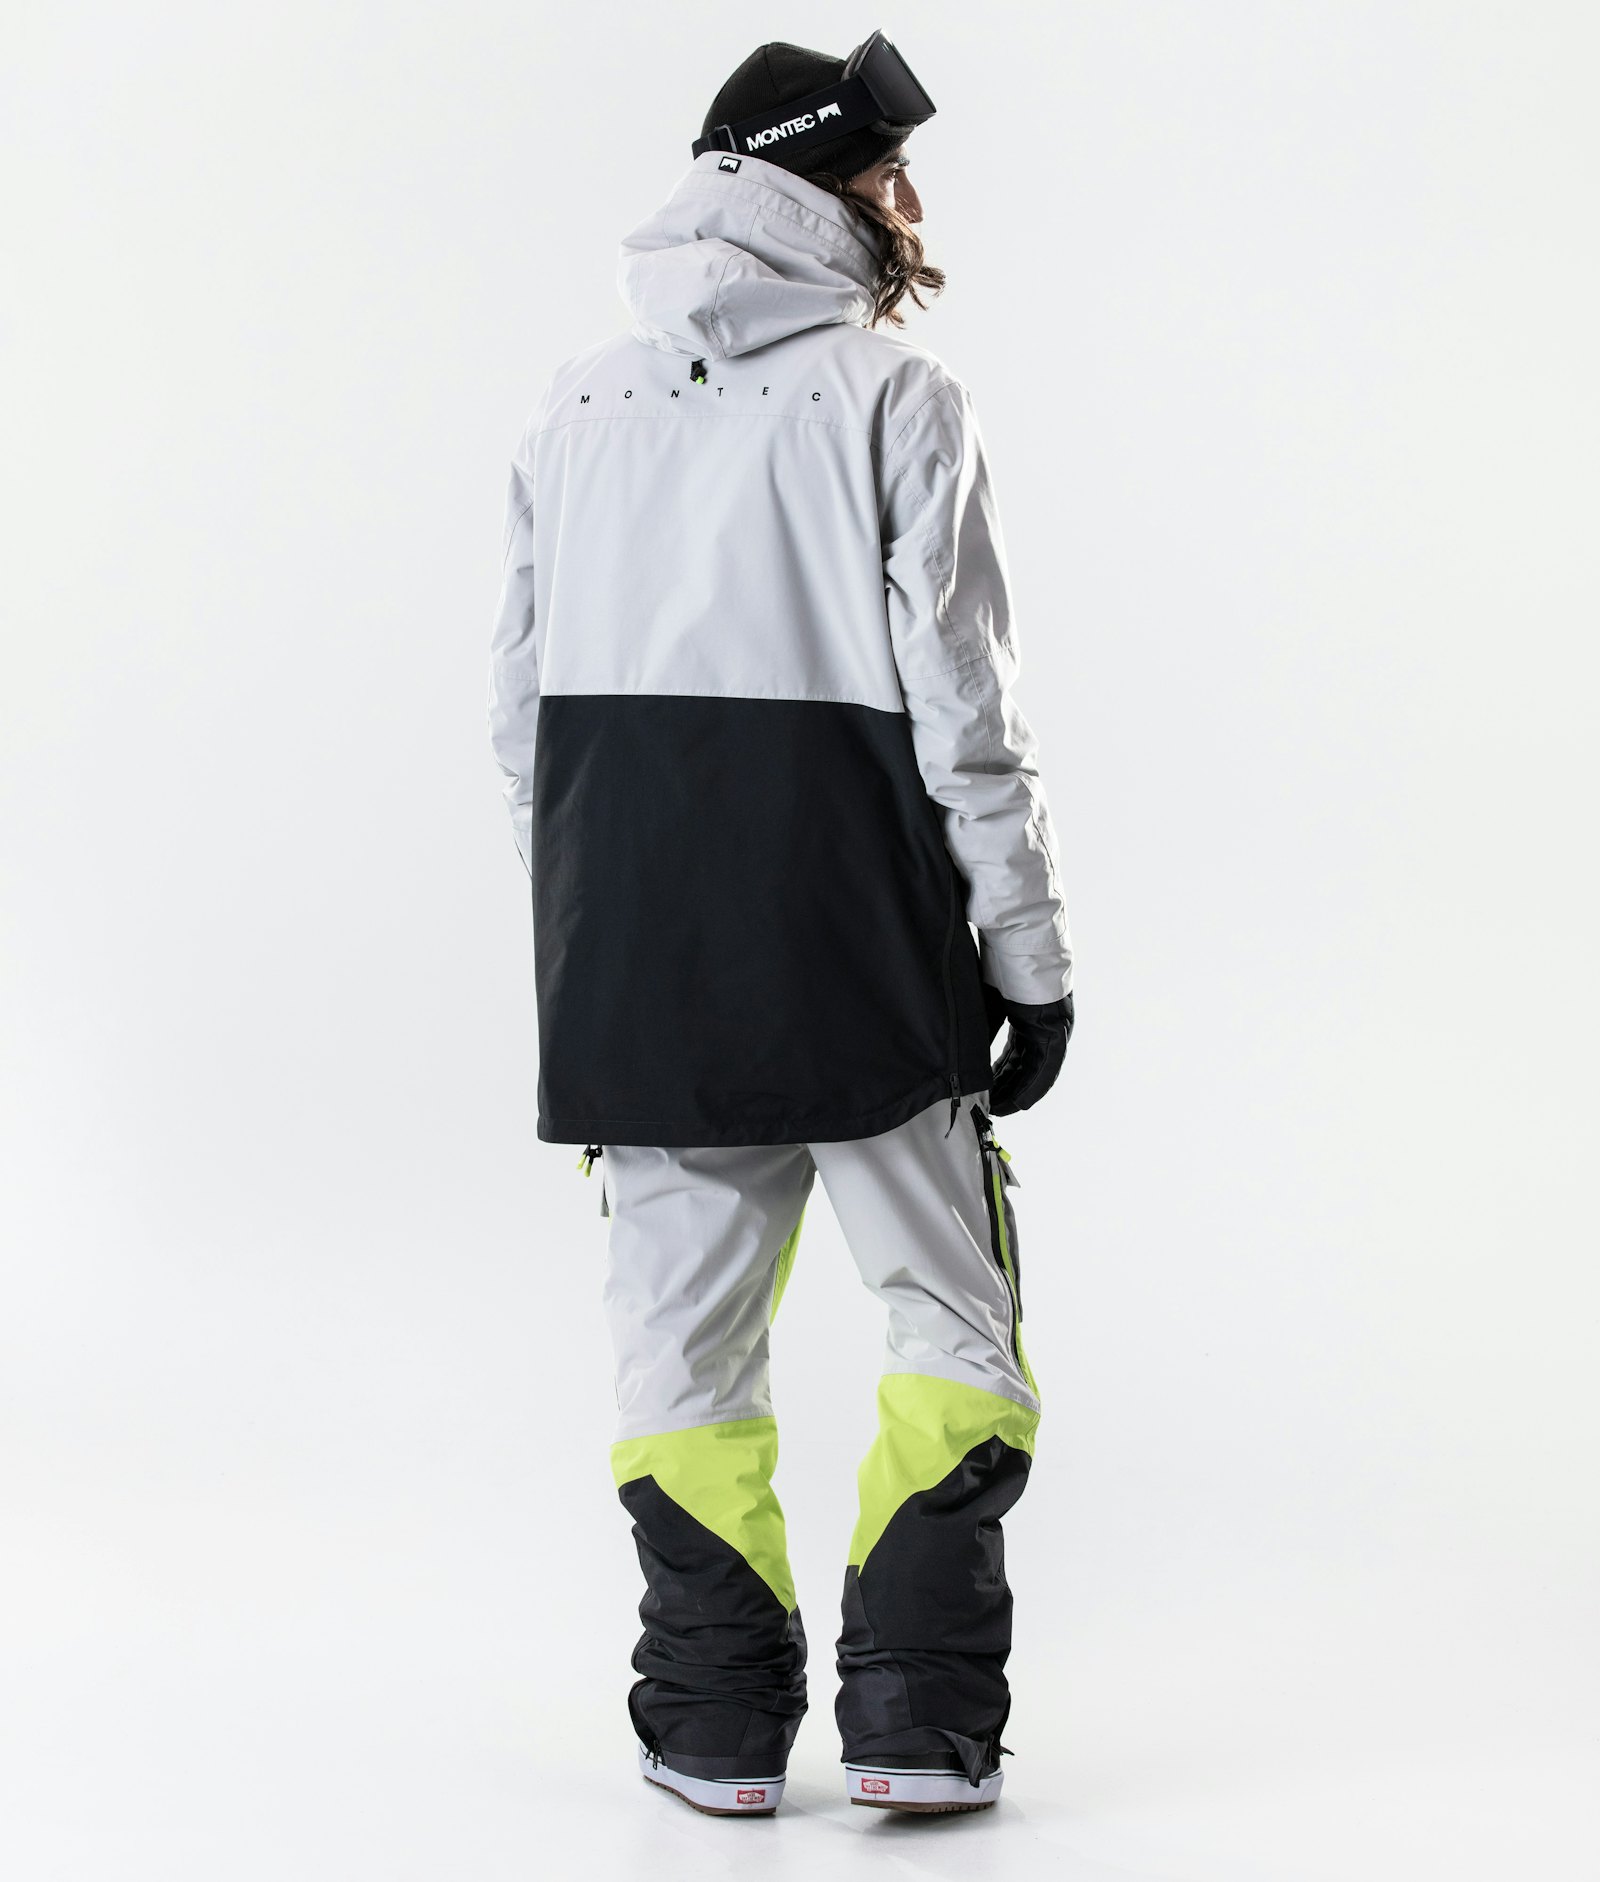 Dune 2020 Snowboard Jacket Men Light Grey/Neon Yellow/Black